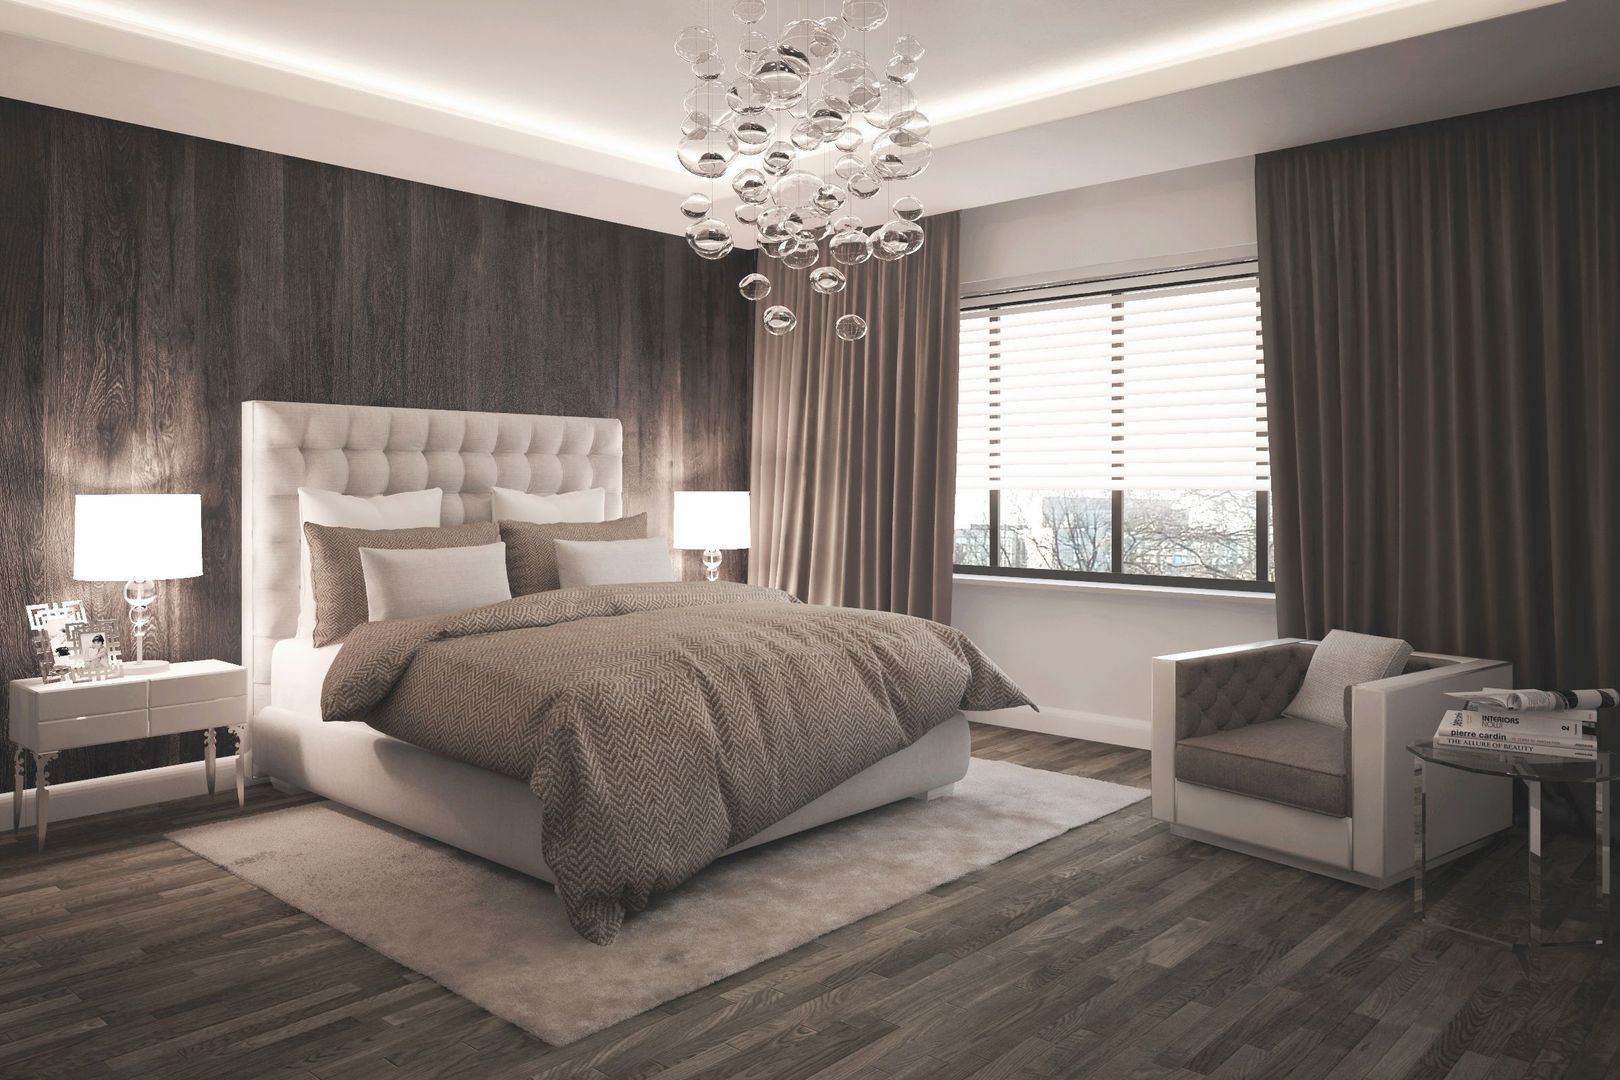 ELISABETH12 / INTERIEUR / DÜSSELDORF, formforhome Architecture & Design formforhome Architecture & Design Modern style bedroom